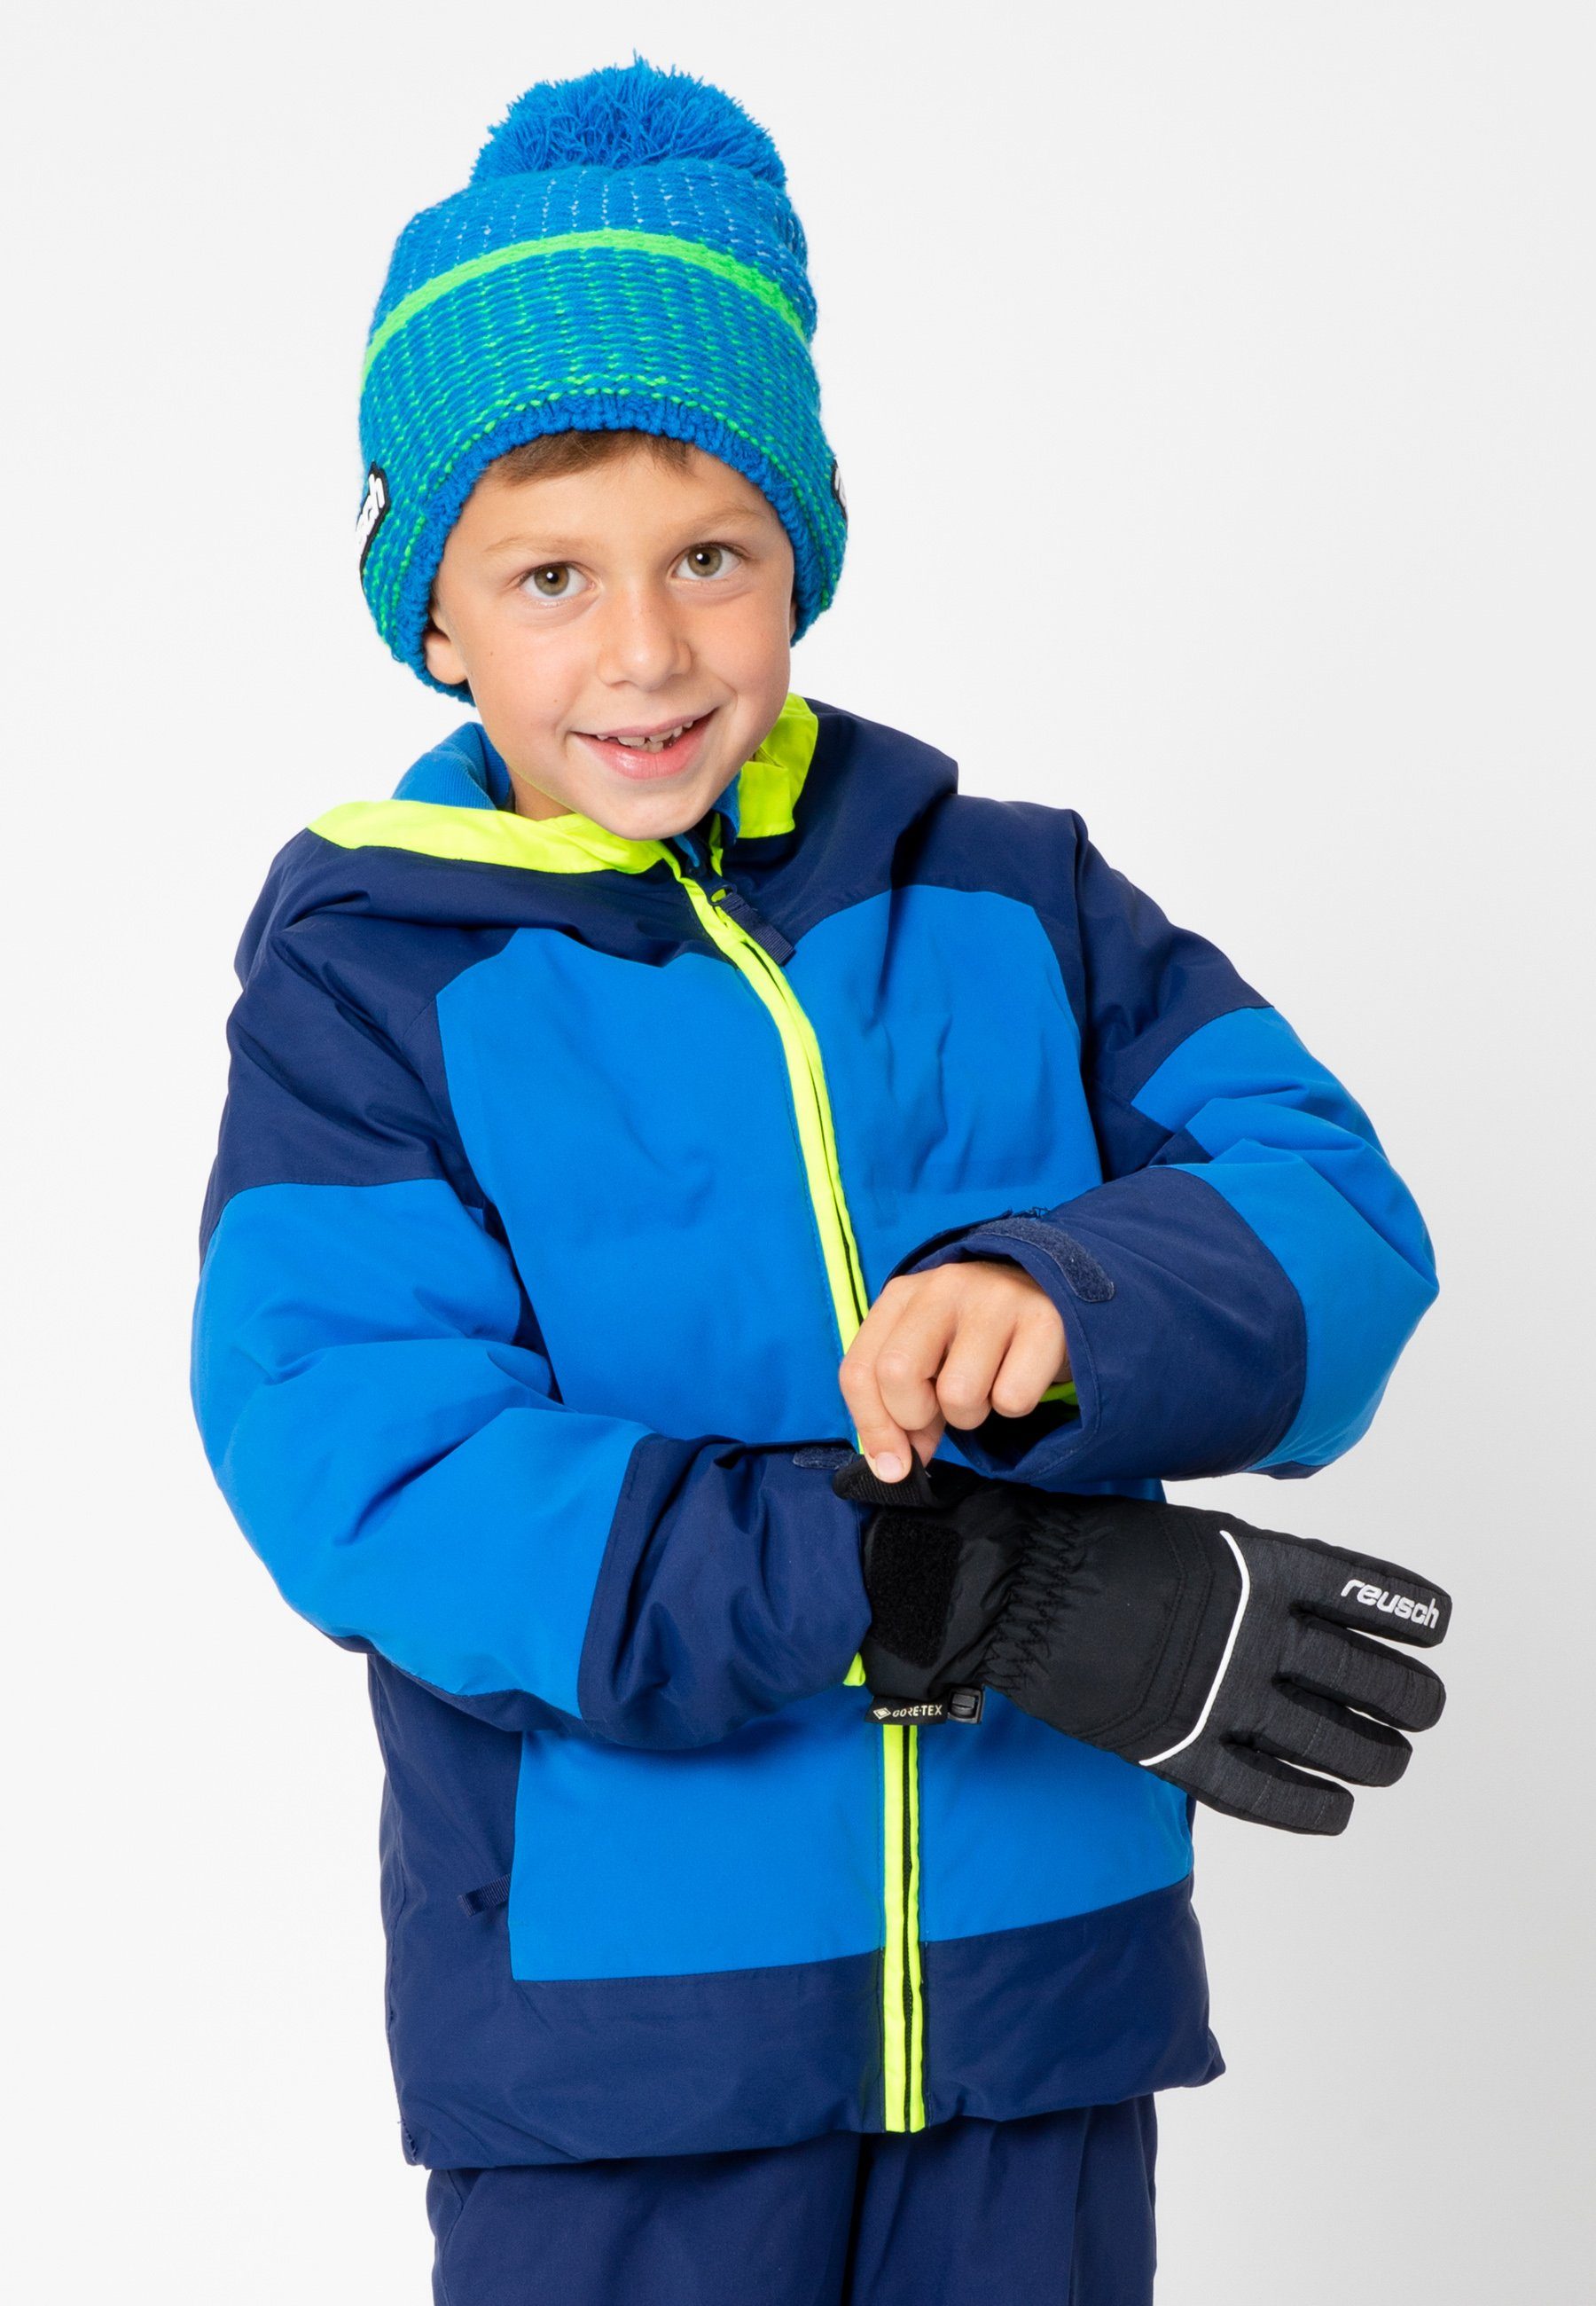 Reusch Skihandschuhe Teddy GORE-TEX mit Funktionsmembran schwarz-grau wasserdichter